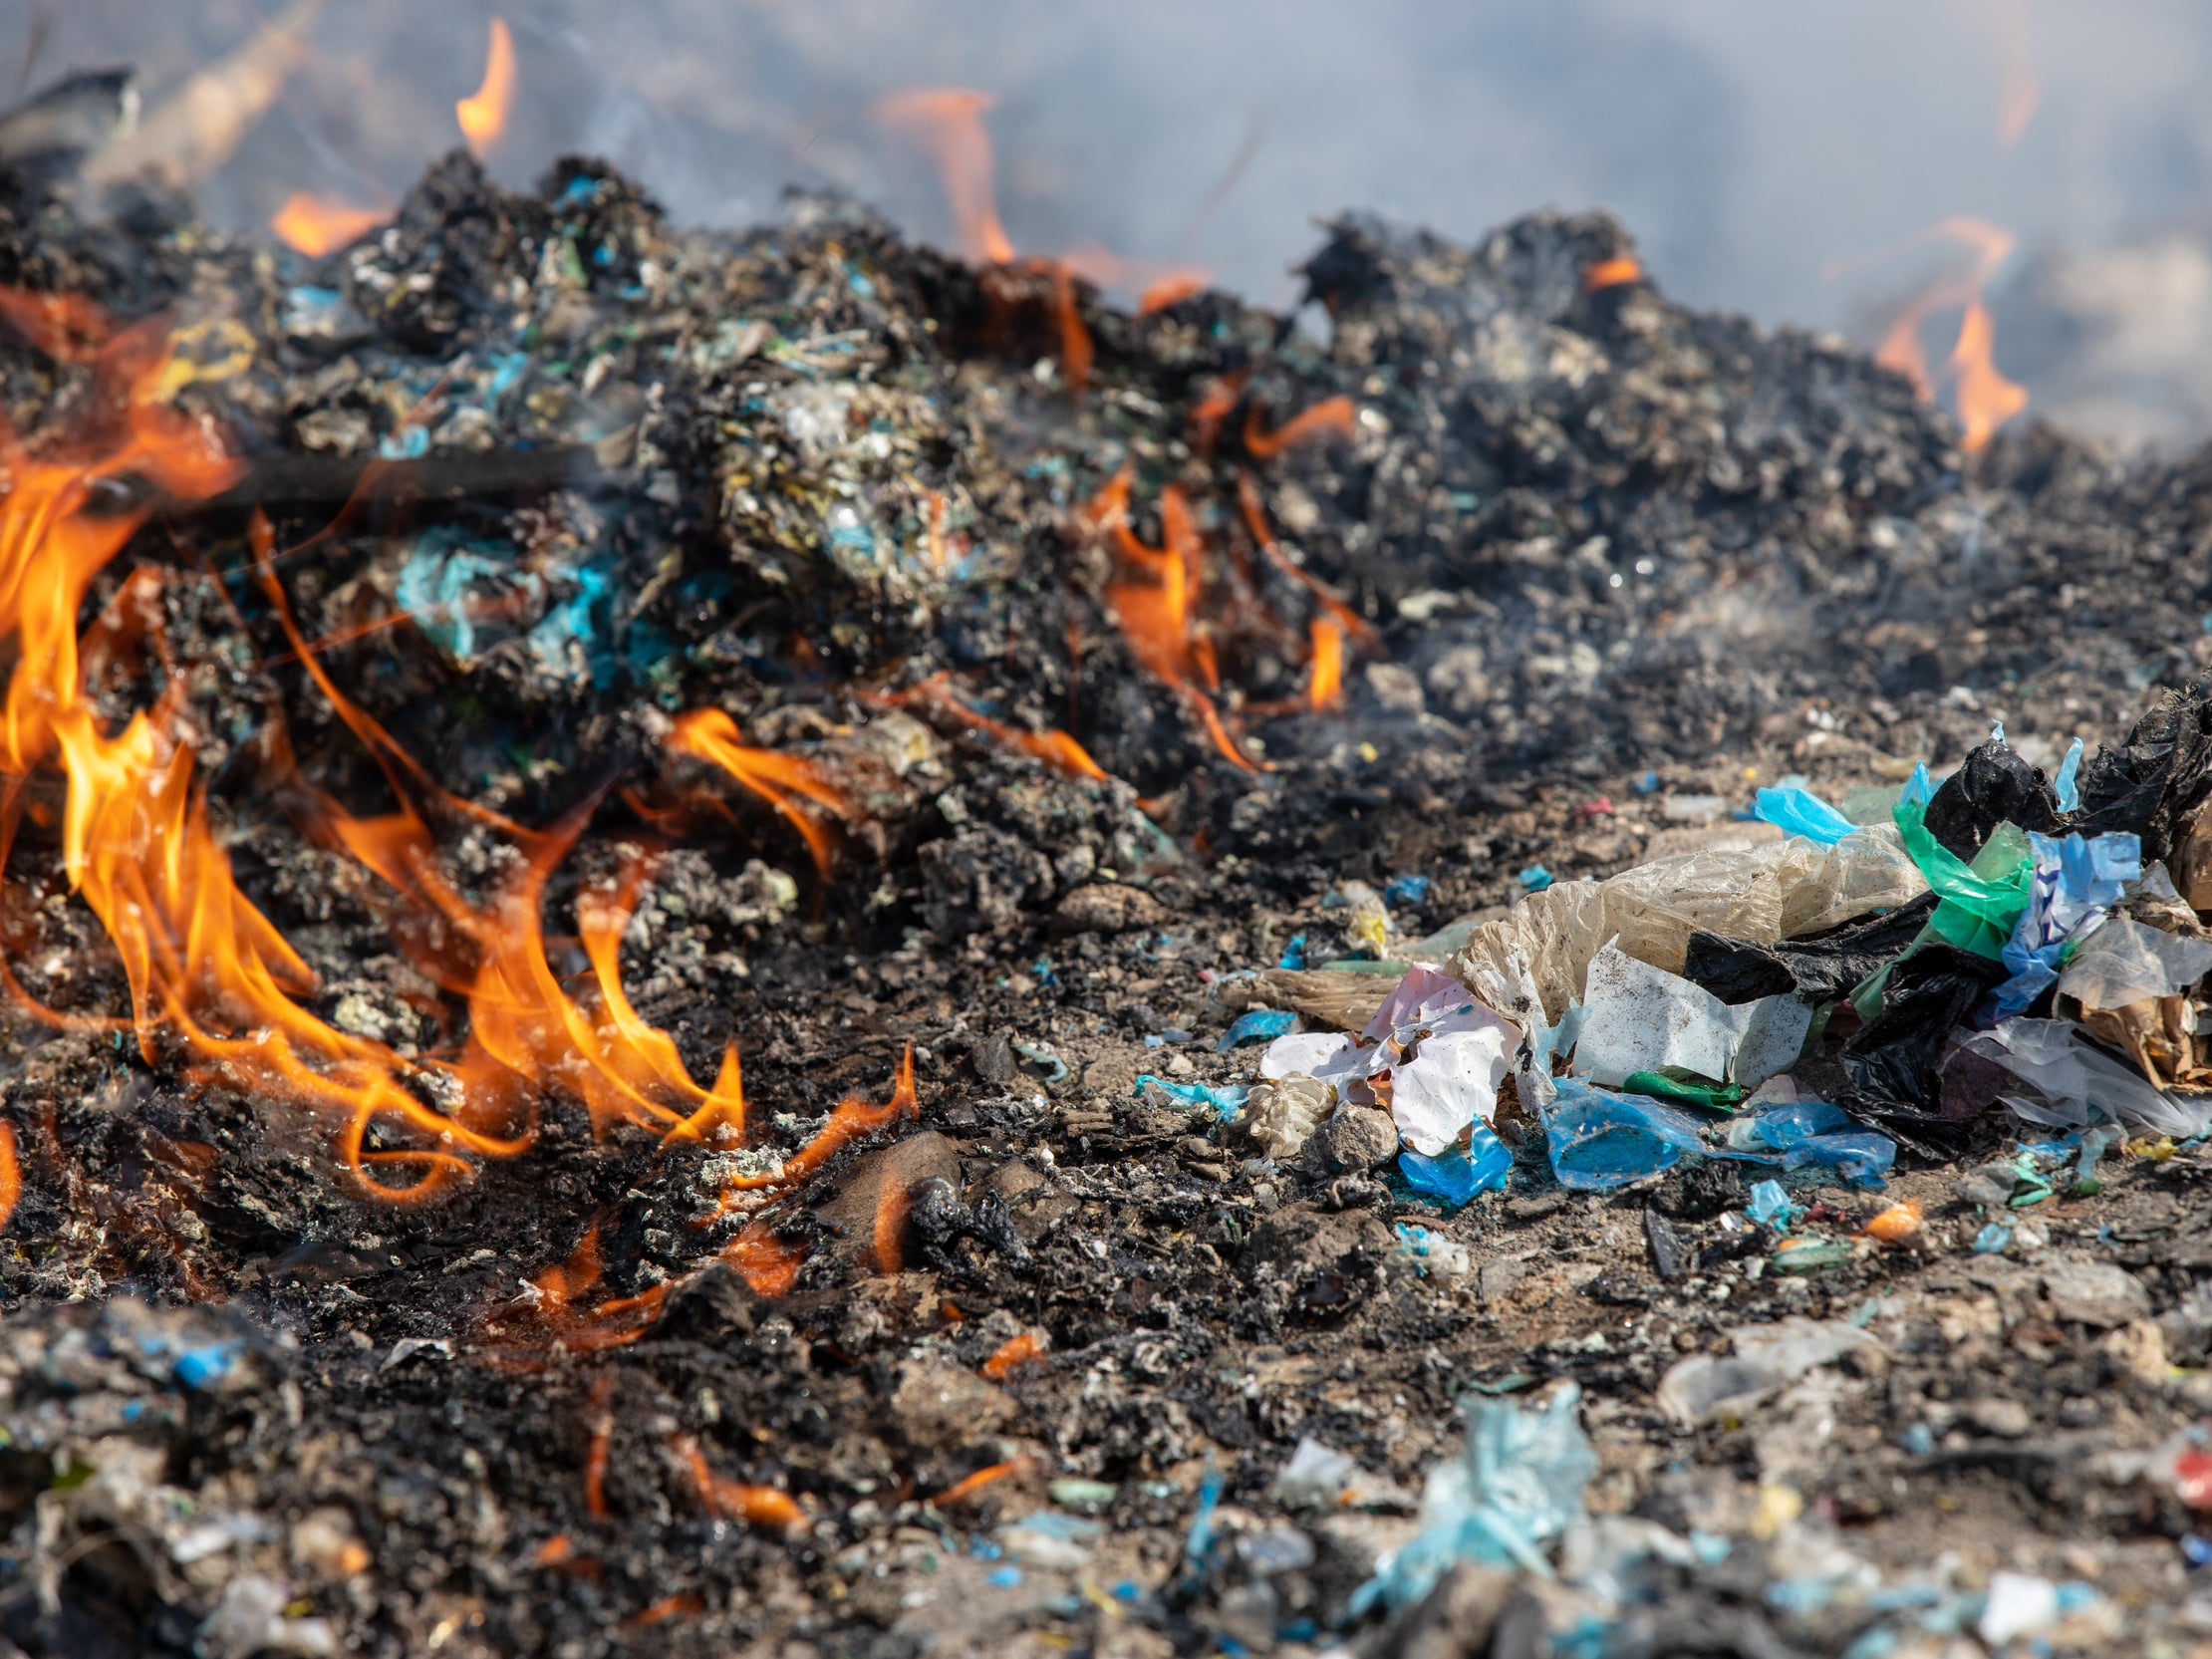 <p>Greenpeace investigators found UK plastics burned at Adana province site</p>